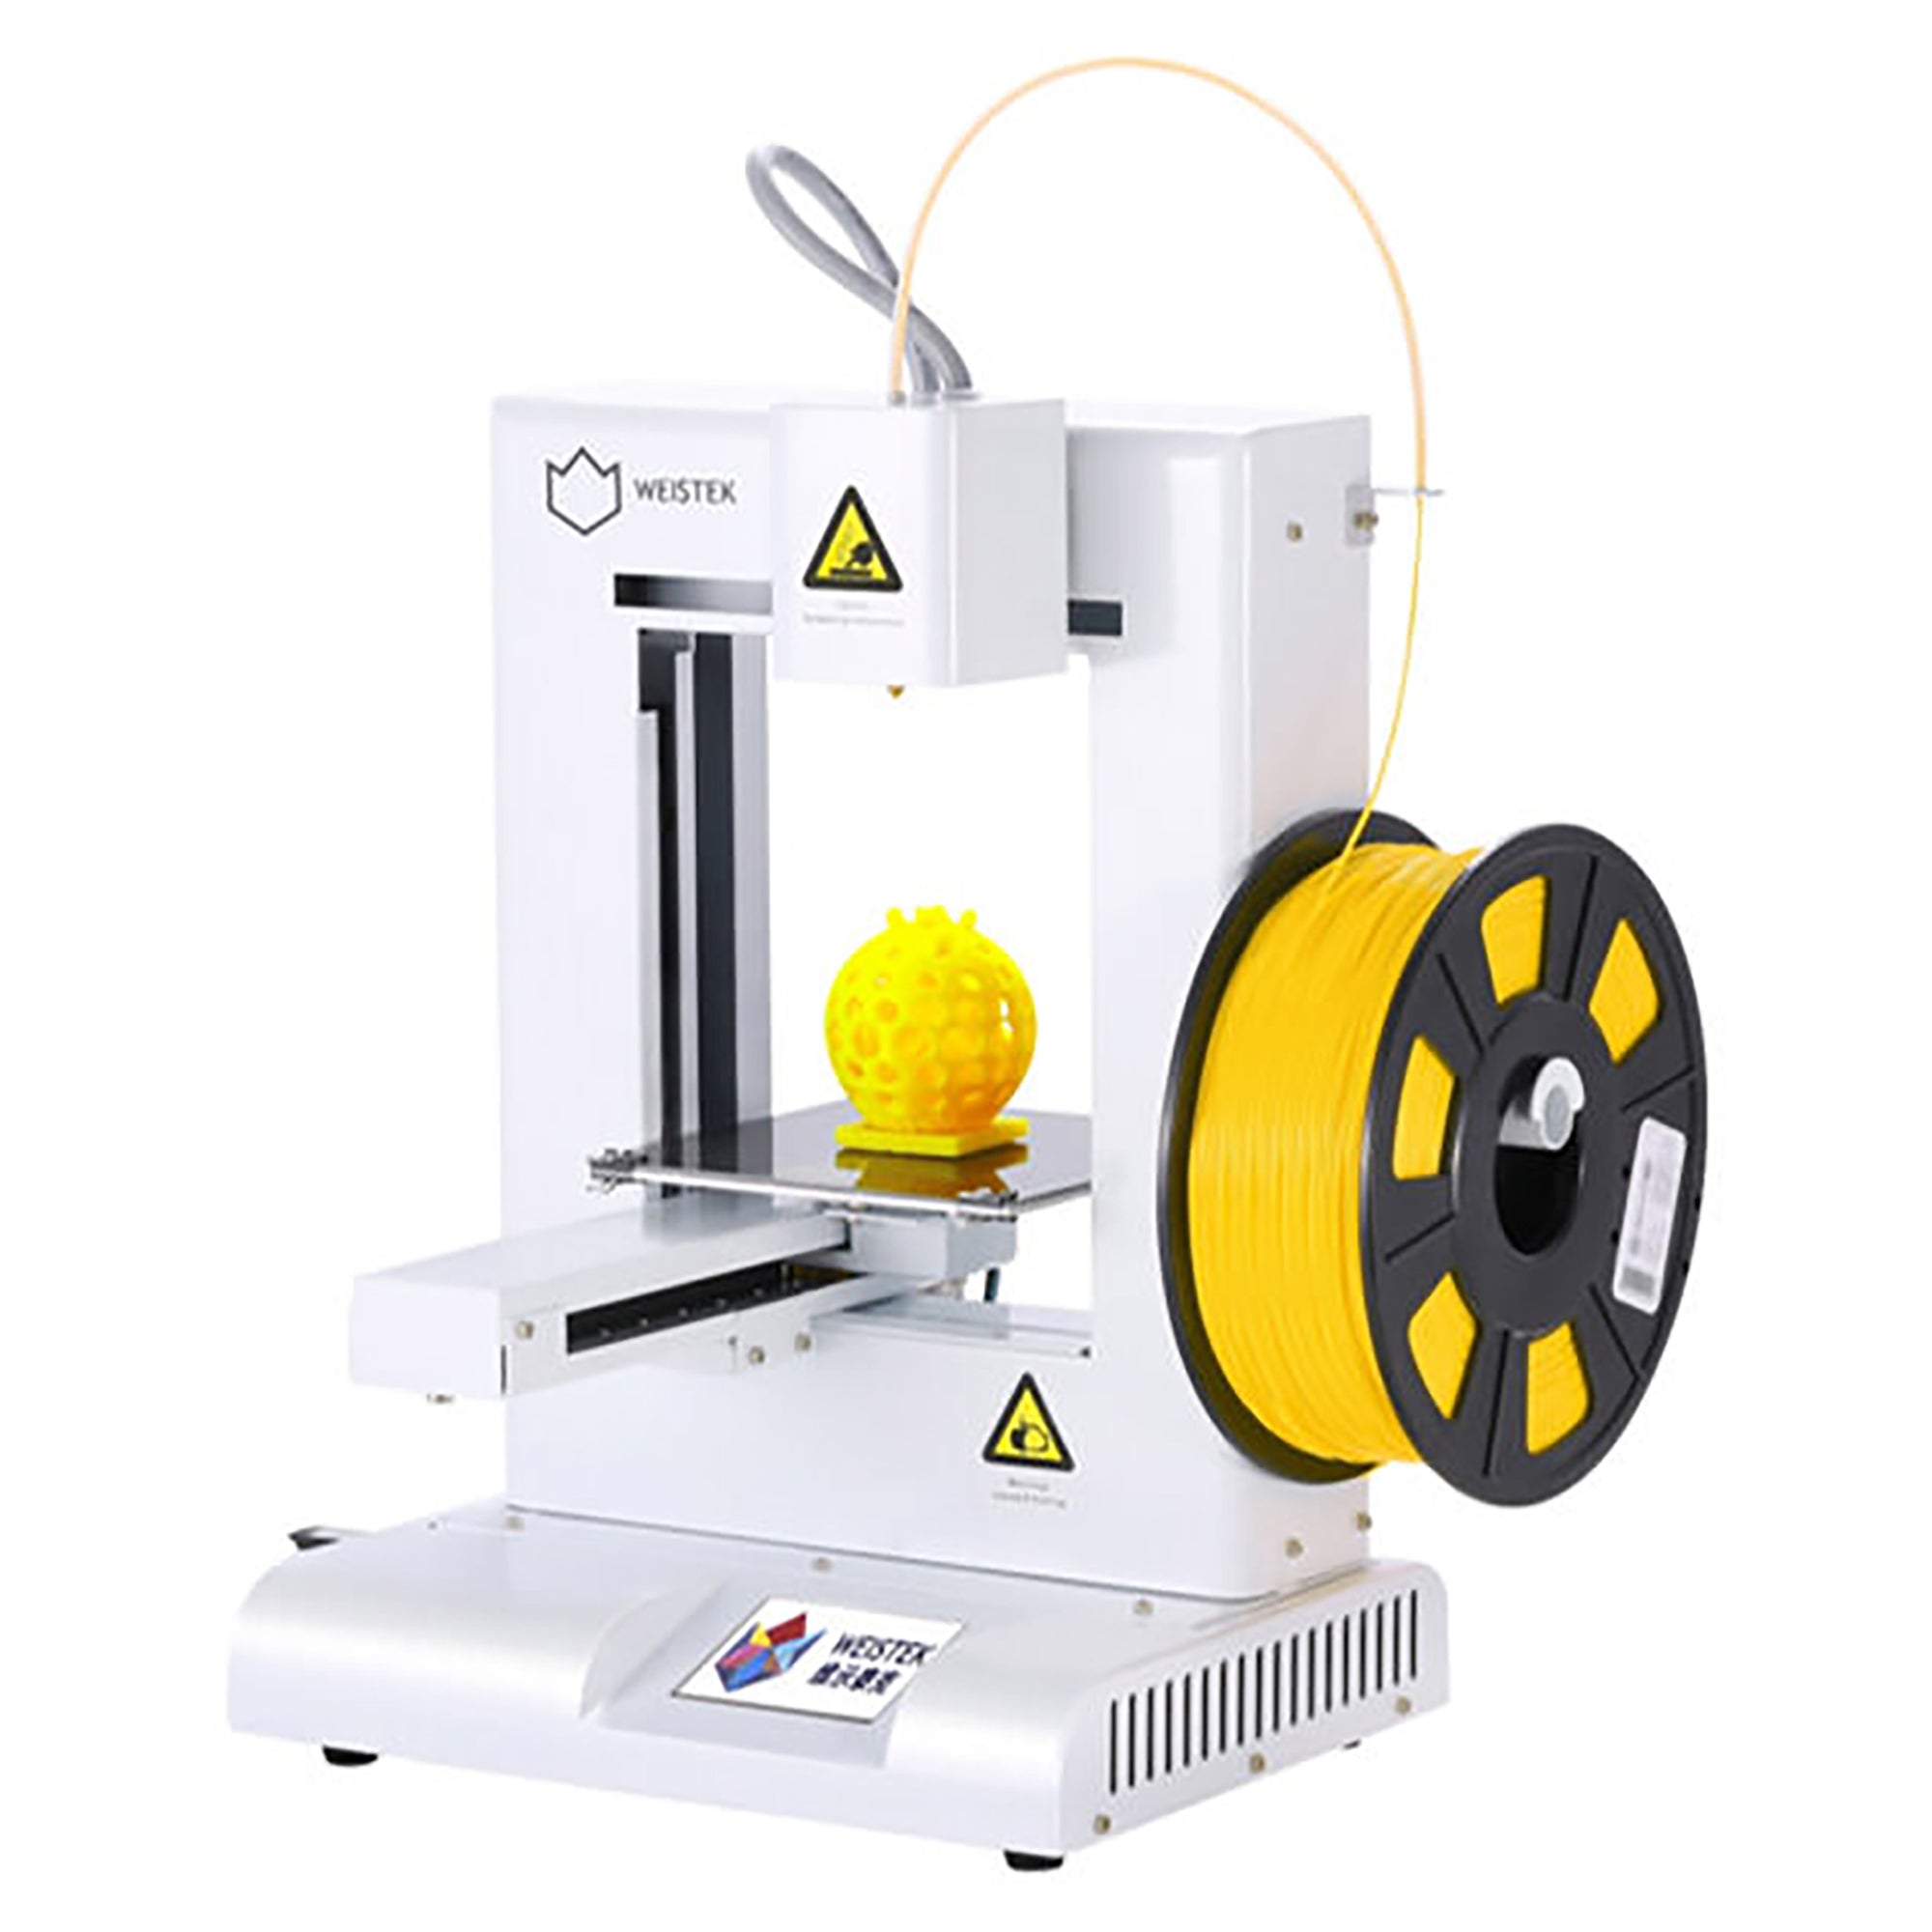 Weistek Ideawerk Speed 3D Printer